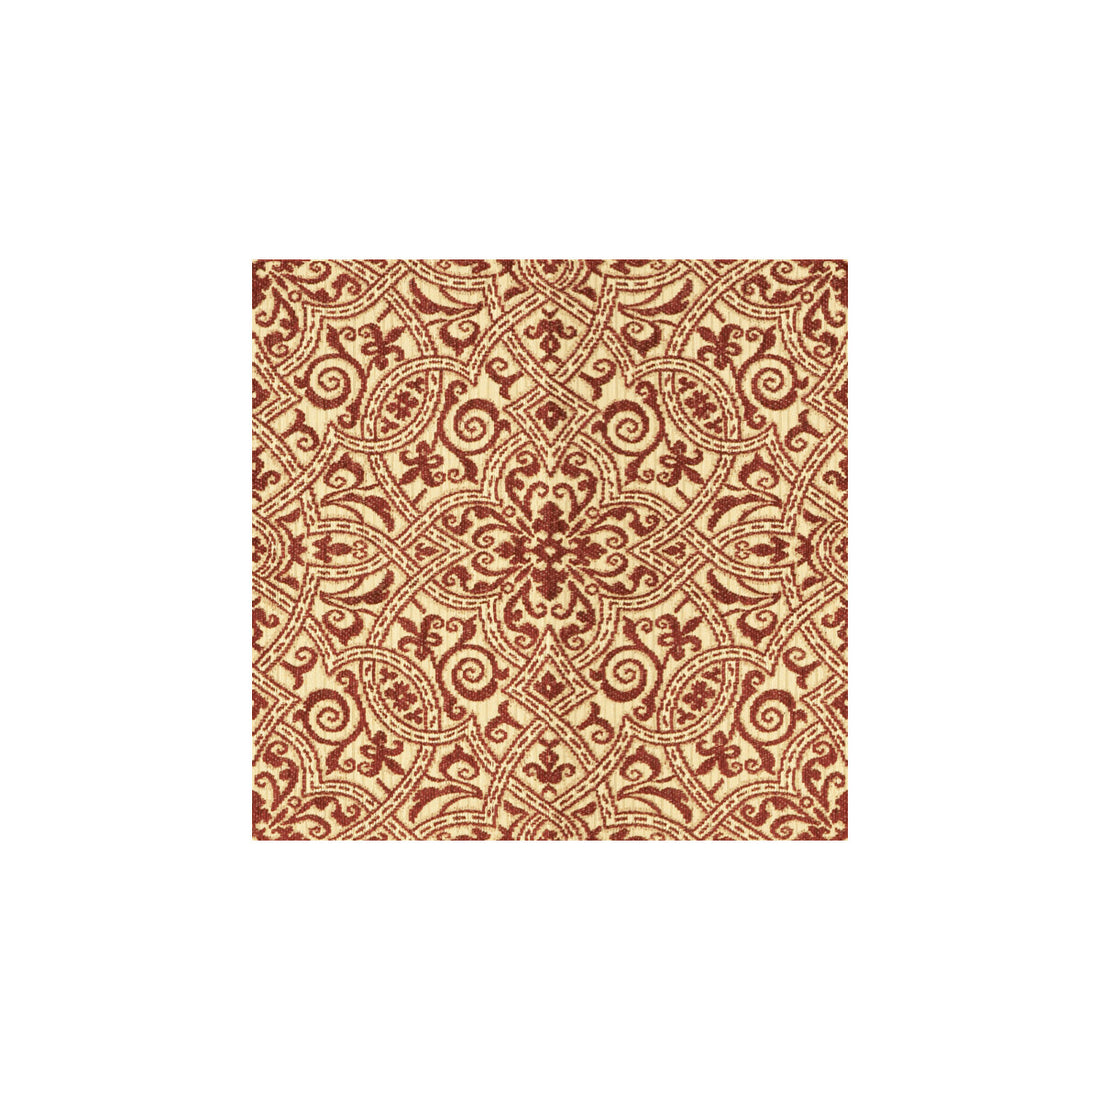 Kravet Design fabric in 31372-9 color - pattern 31372.9.0 - by Kravet Design in the Gis collection